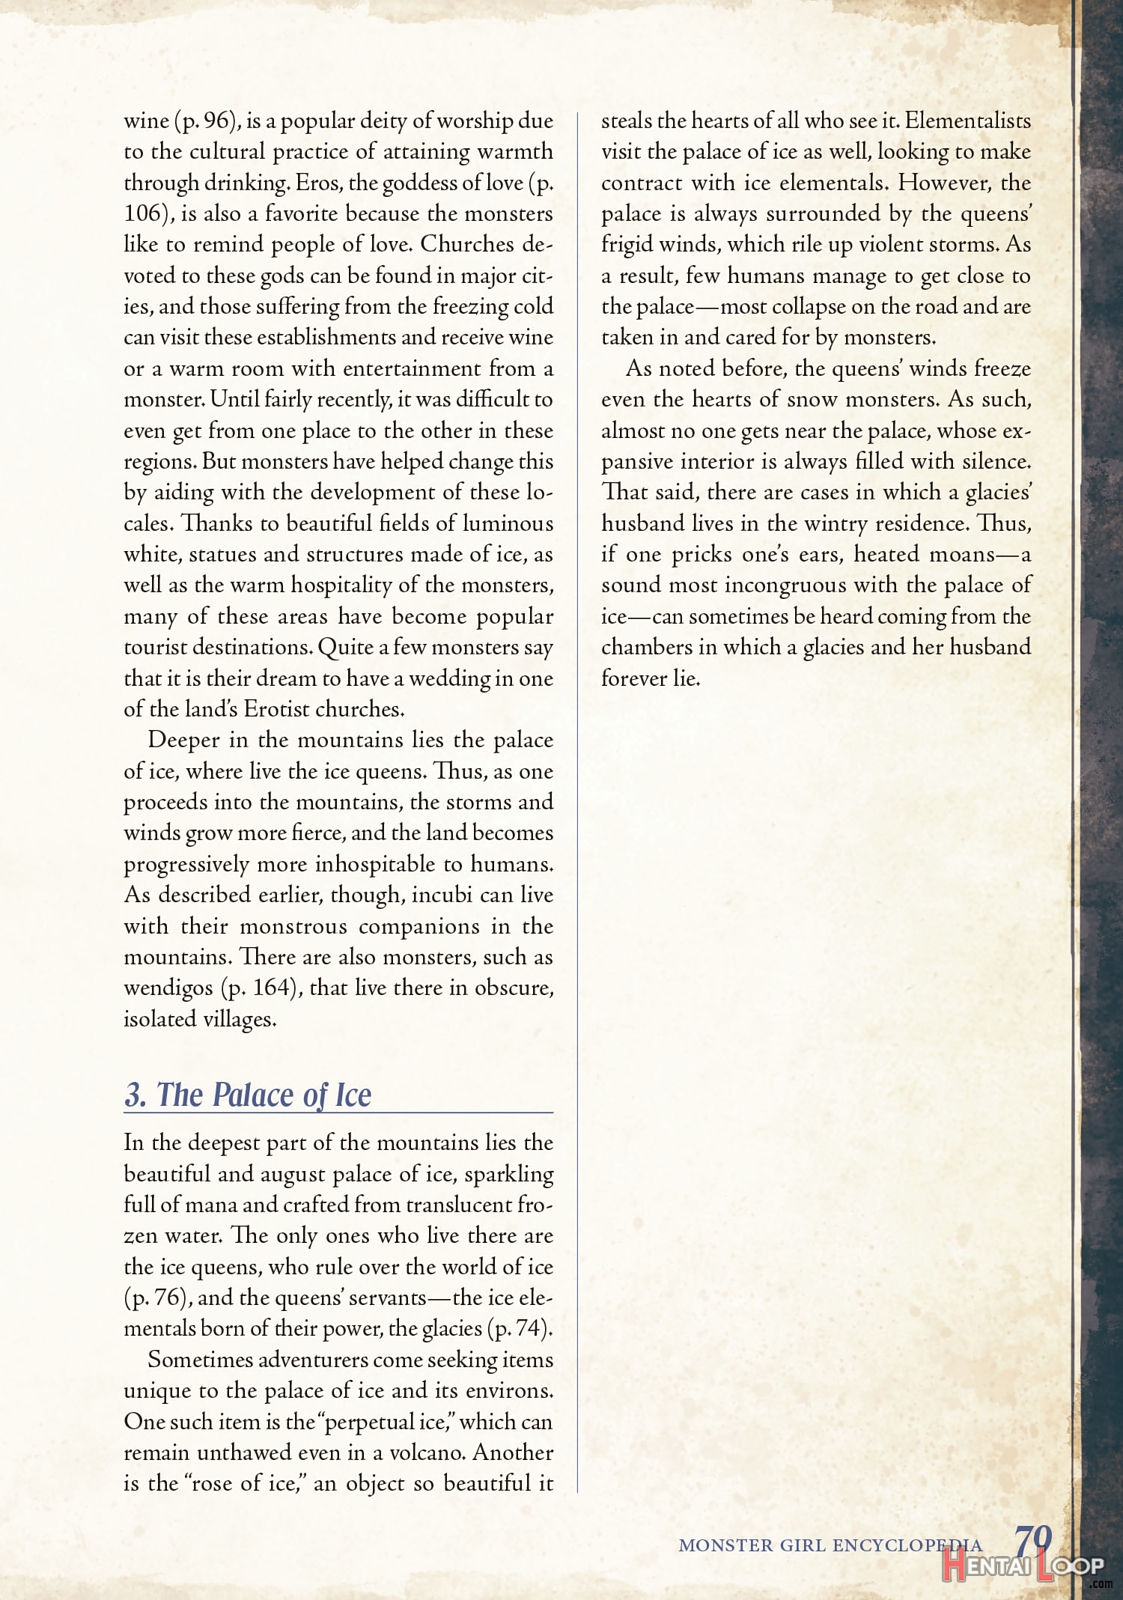 Monster Girl Encyclopedia Vol. 2 page 80